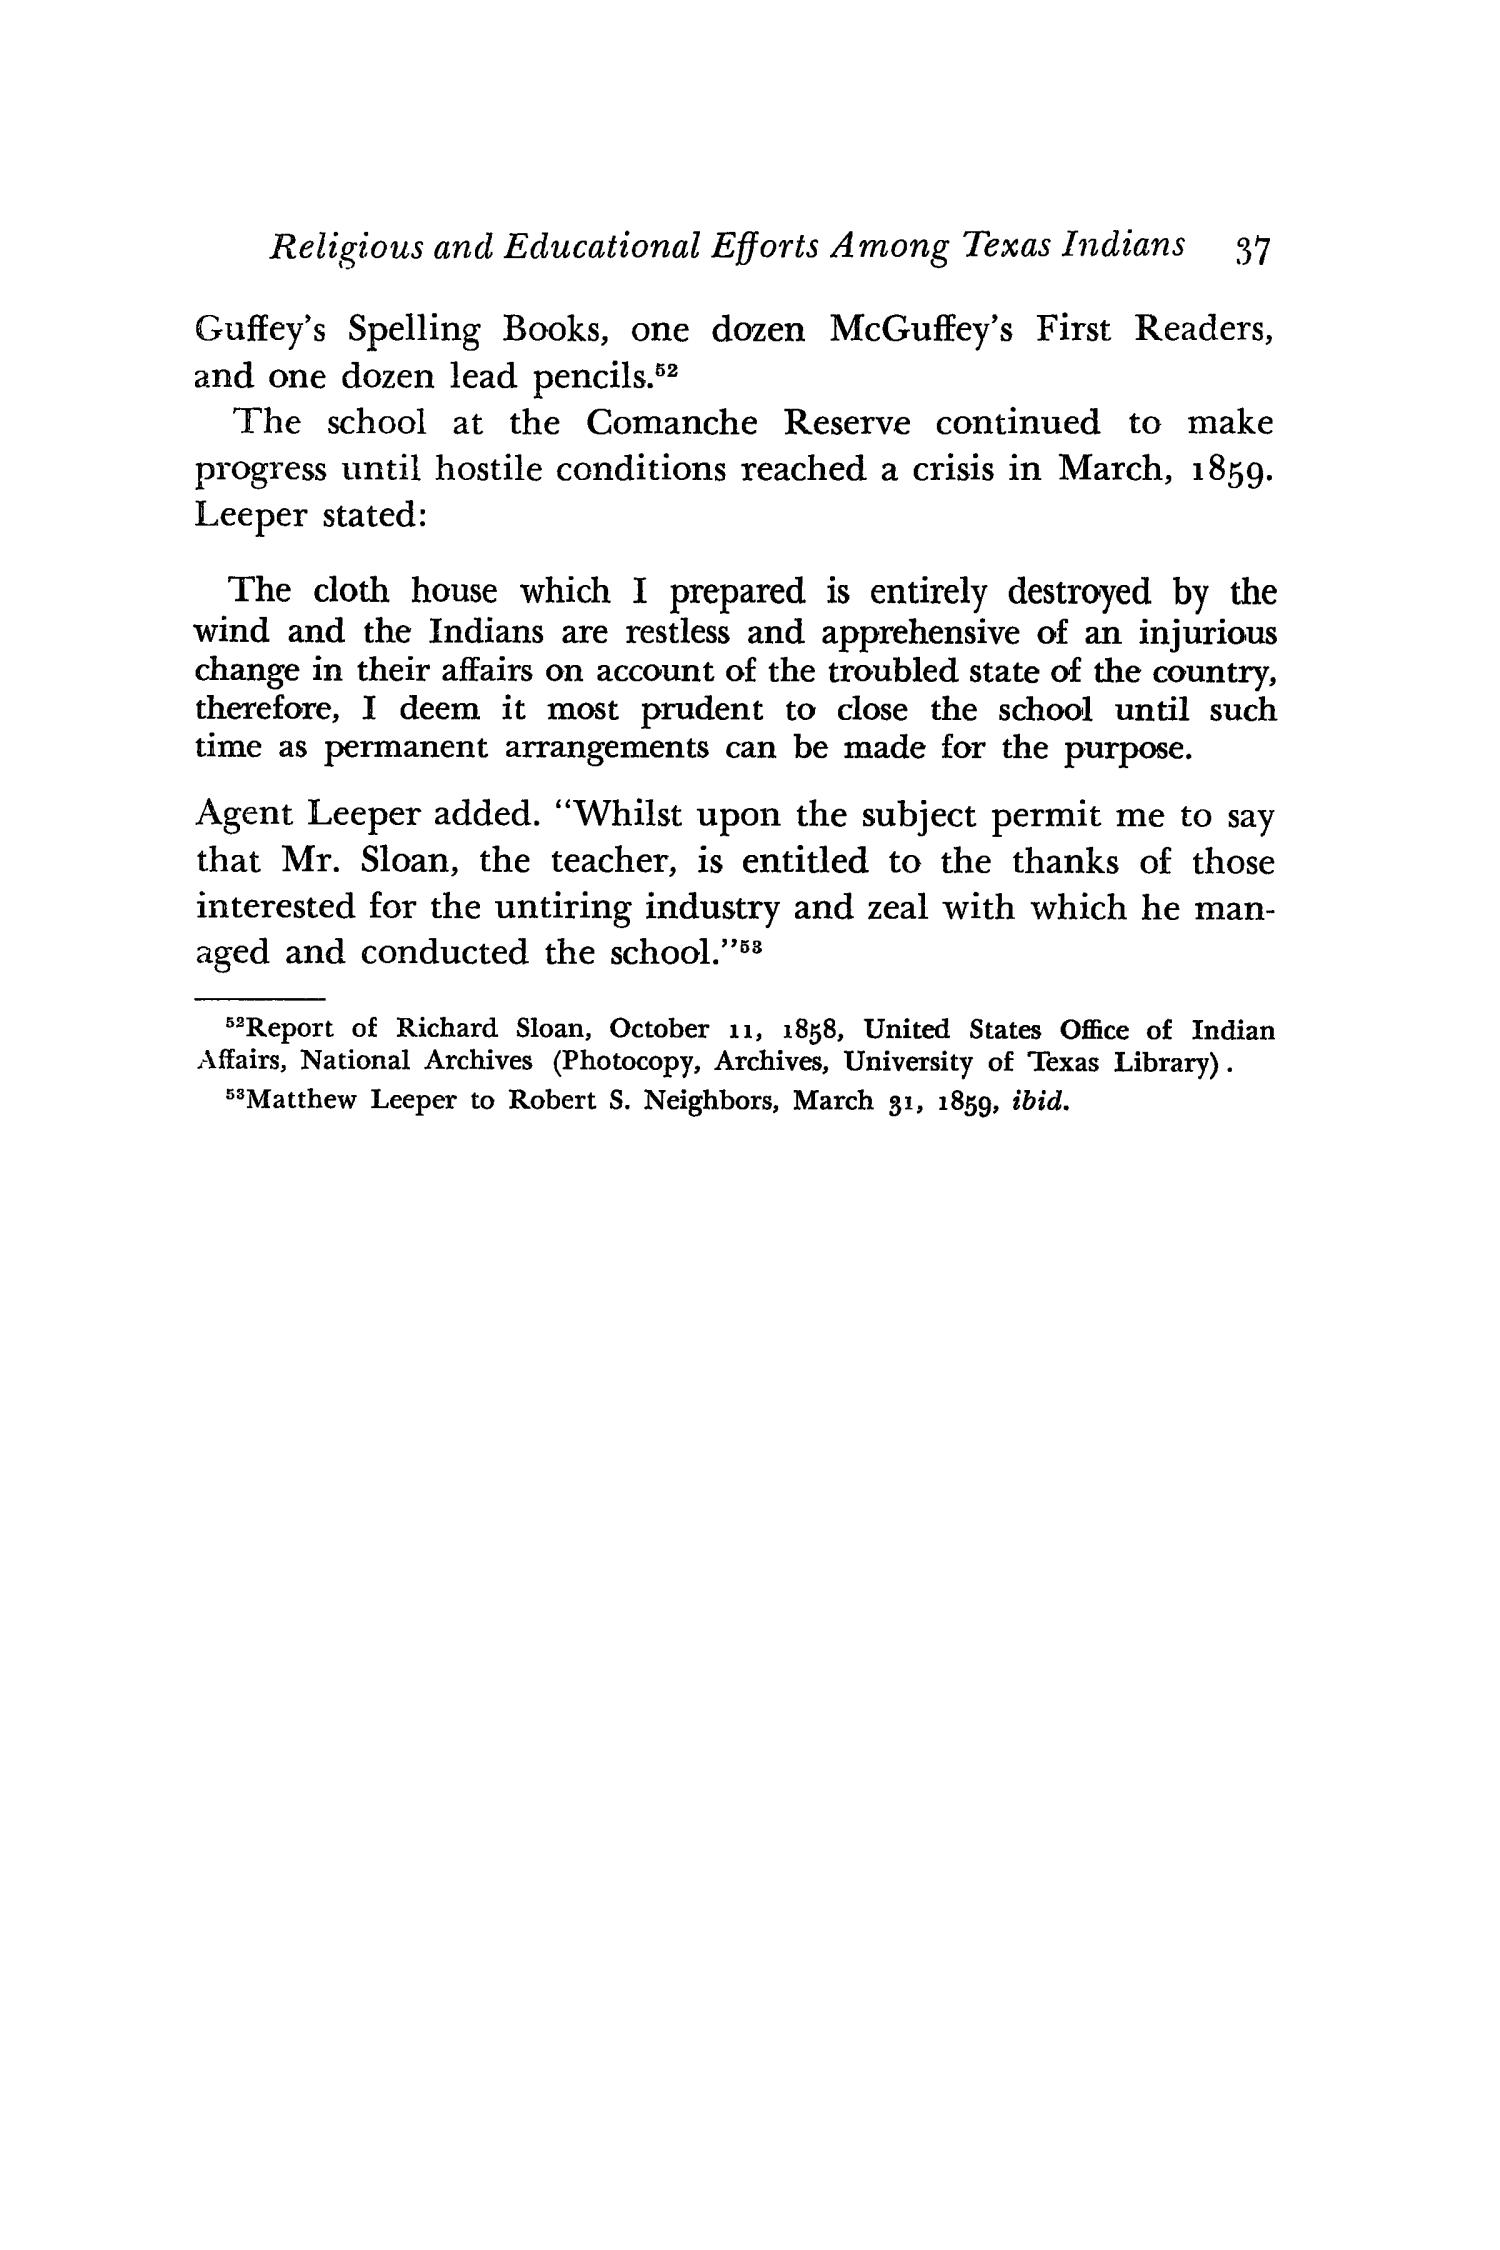 The Southwestern Historical Quarterly, Volume 69, July 1965 - April, 1966
                                                
                                                    37
                                                